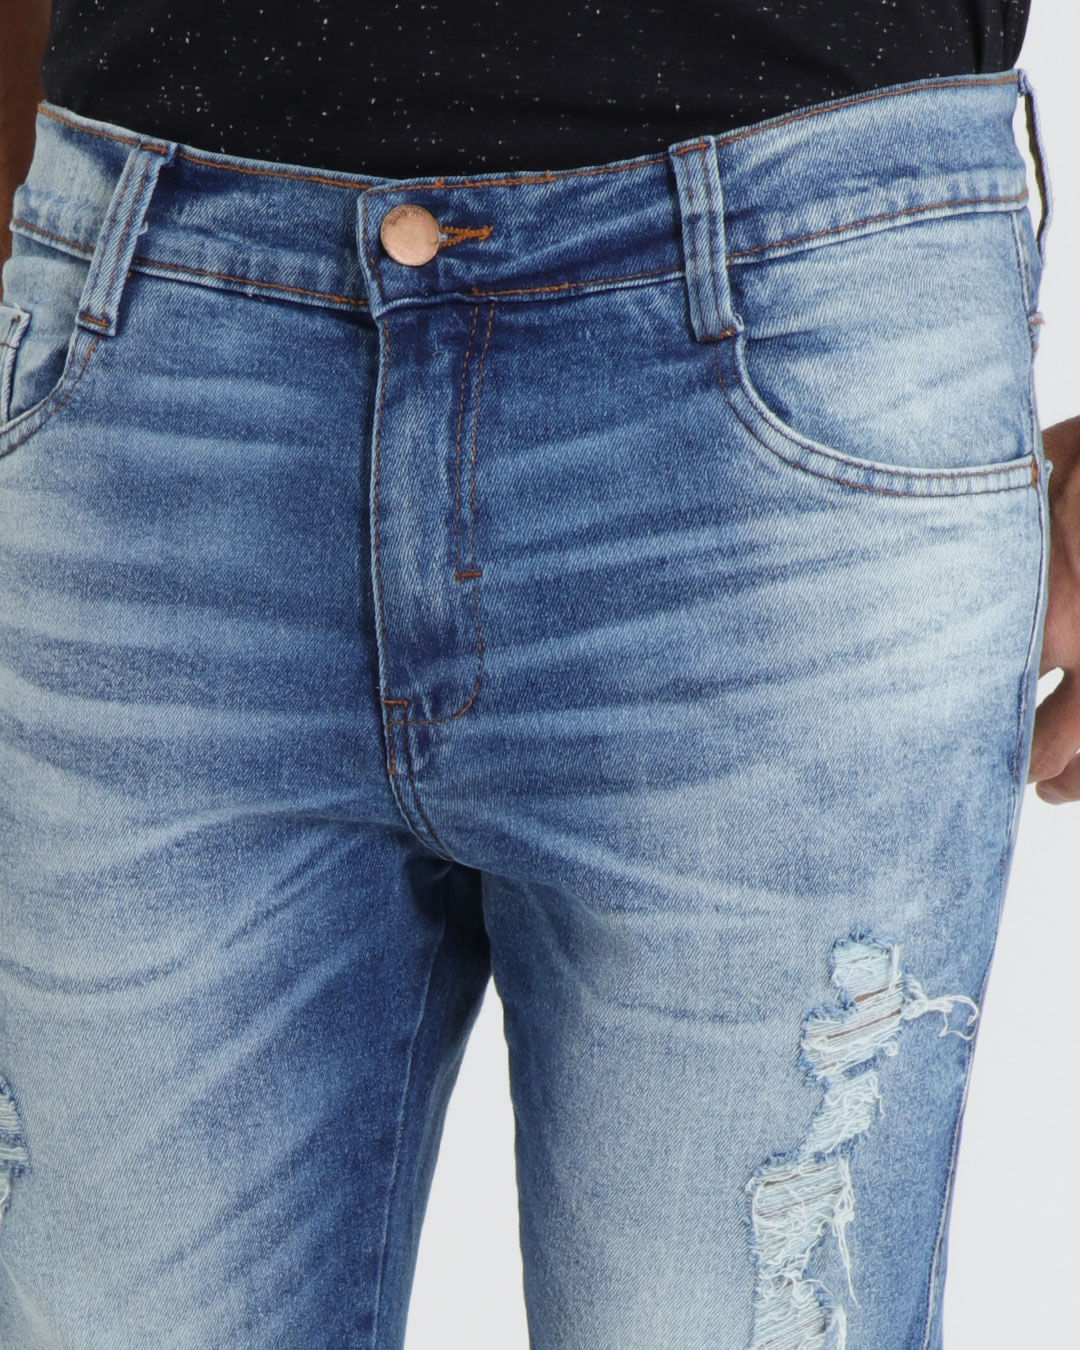 Calca-Jeans-Masculina-Elastano-Com-Puidos-Delave-Azul